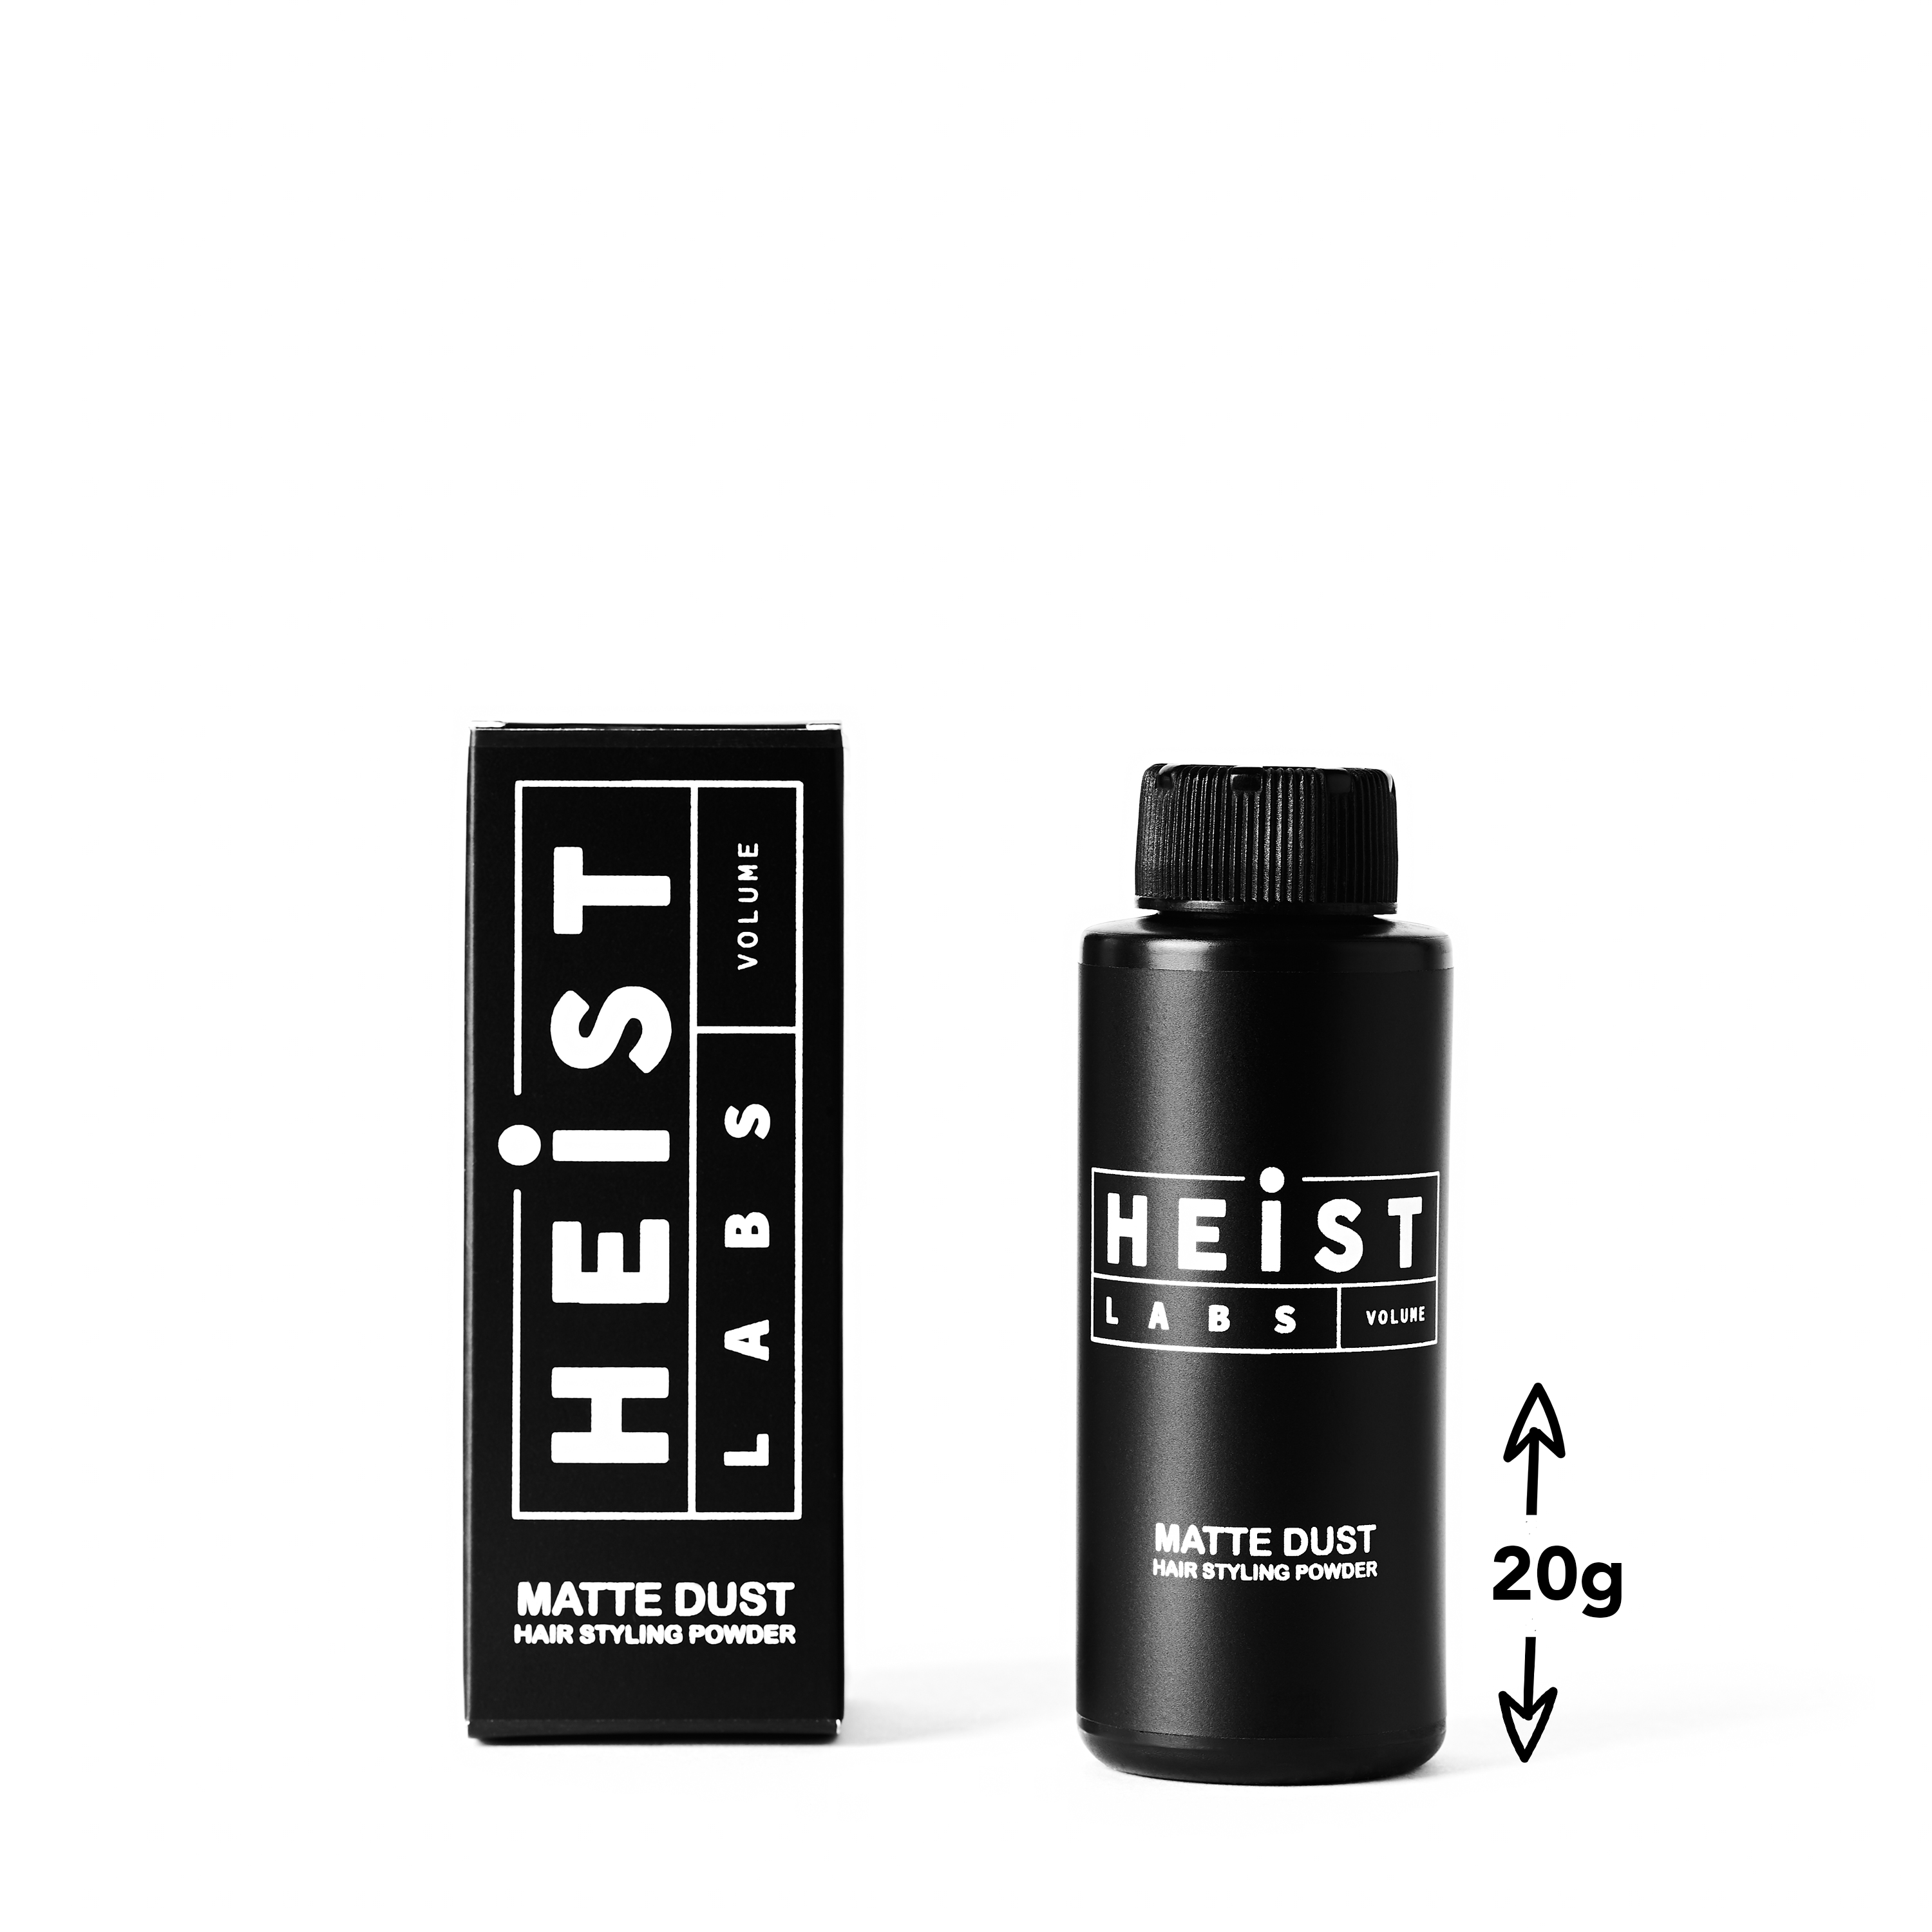 Matte Dust Hair Styling Powder by Heist Labs - Volume & Dry Texture (20g)